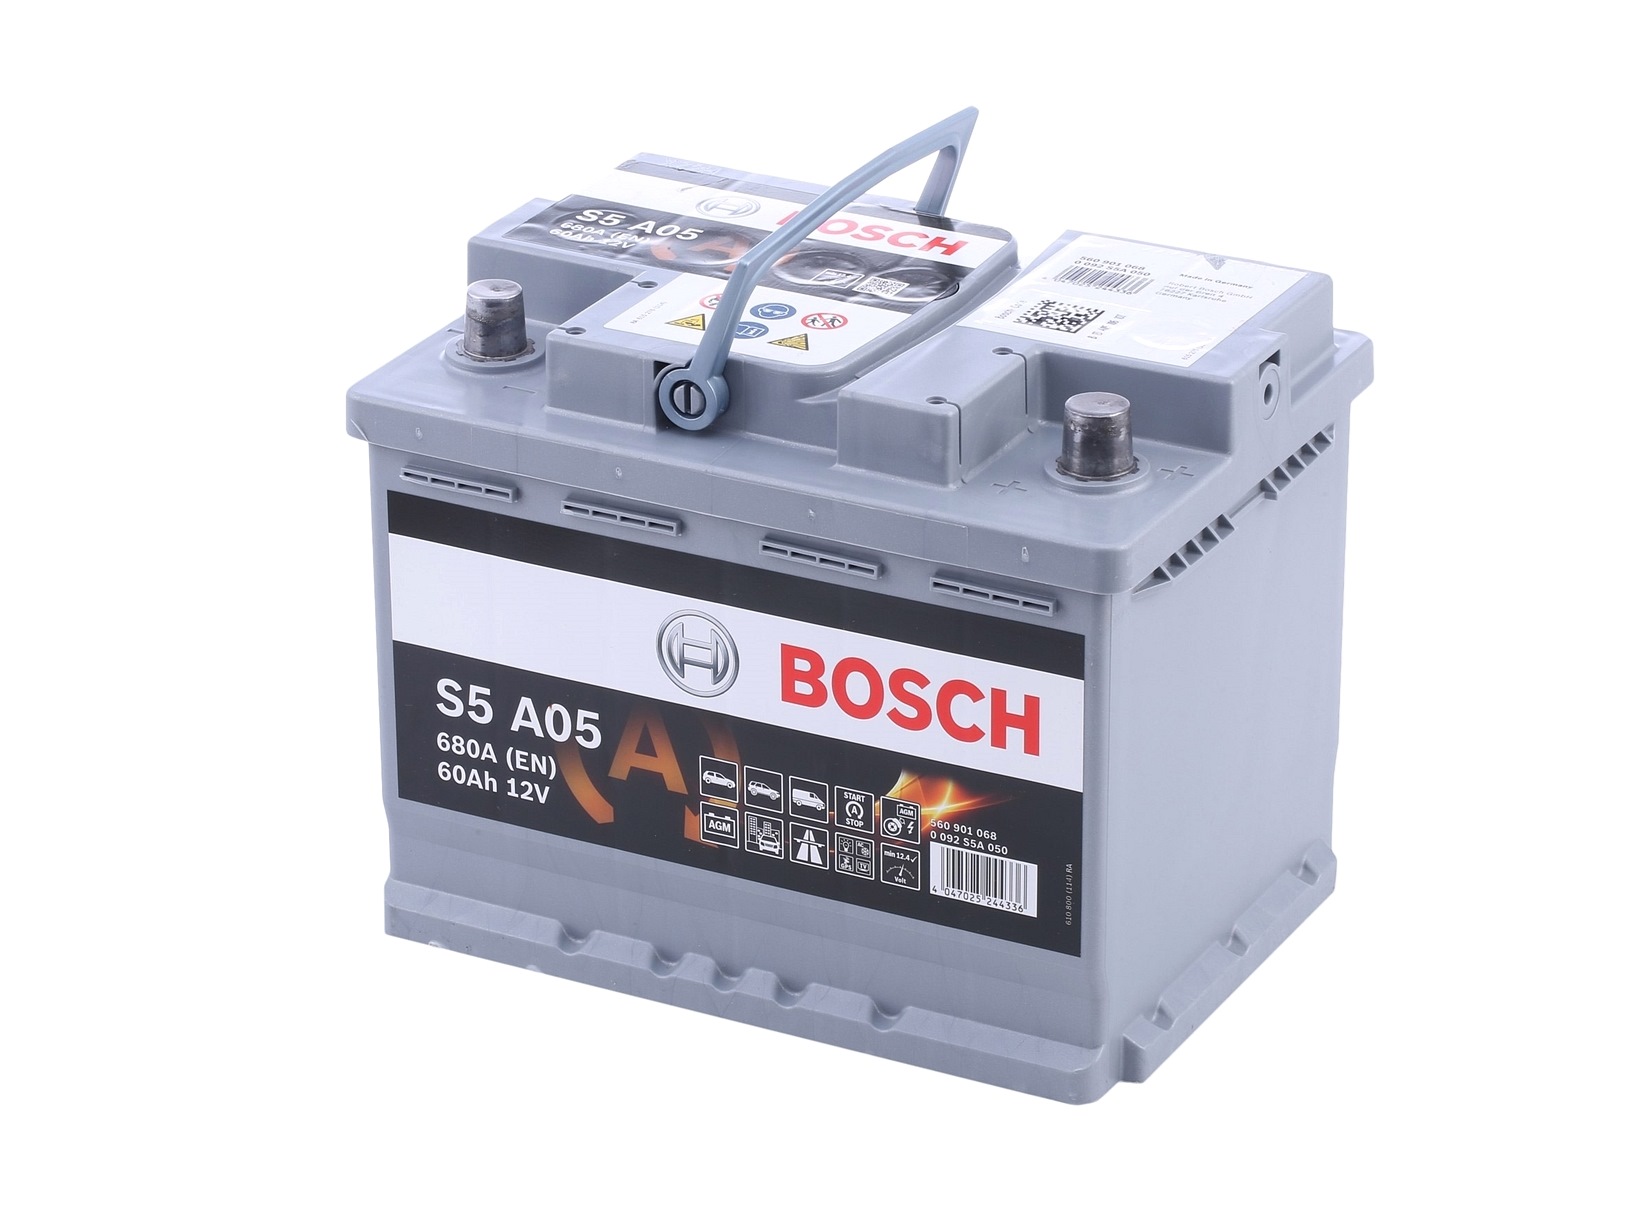 S5 A05 BOSCH S5 Autobatterie 0 092 S5A 050 12V 60Ah 680A B13 AGM-Batterie Kälteprüfstrom EN: 680A, Spannung: 12V